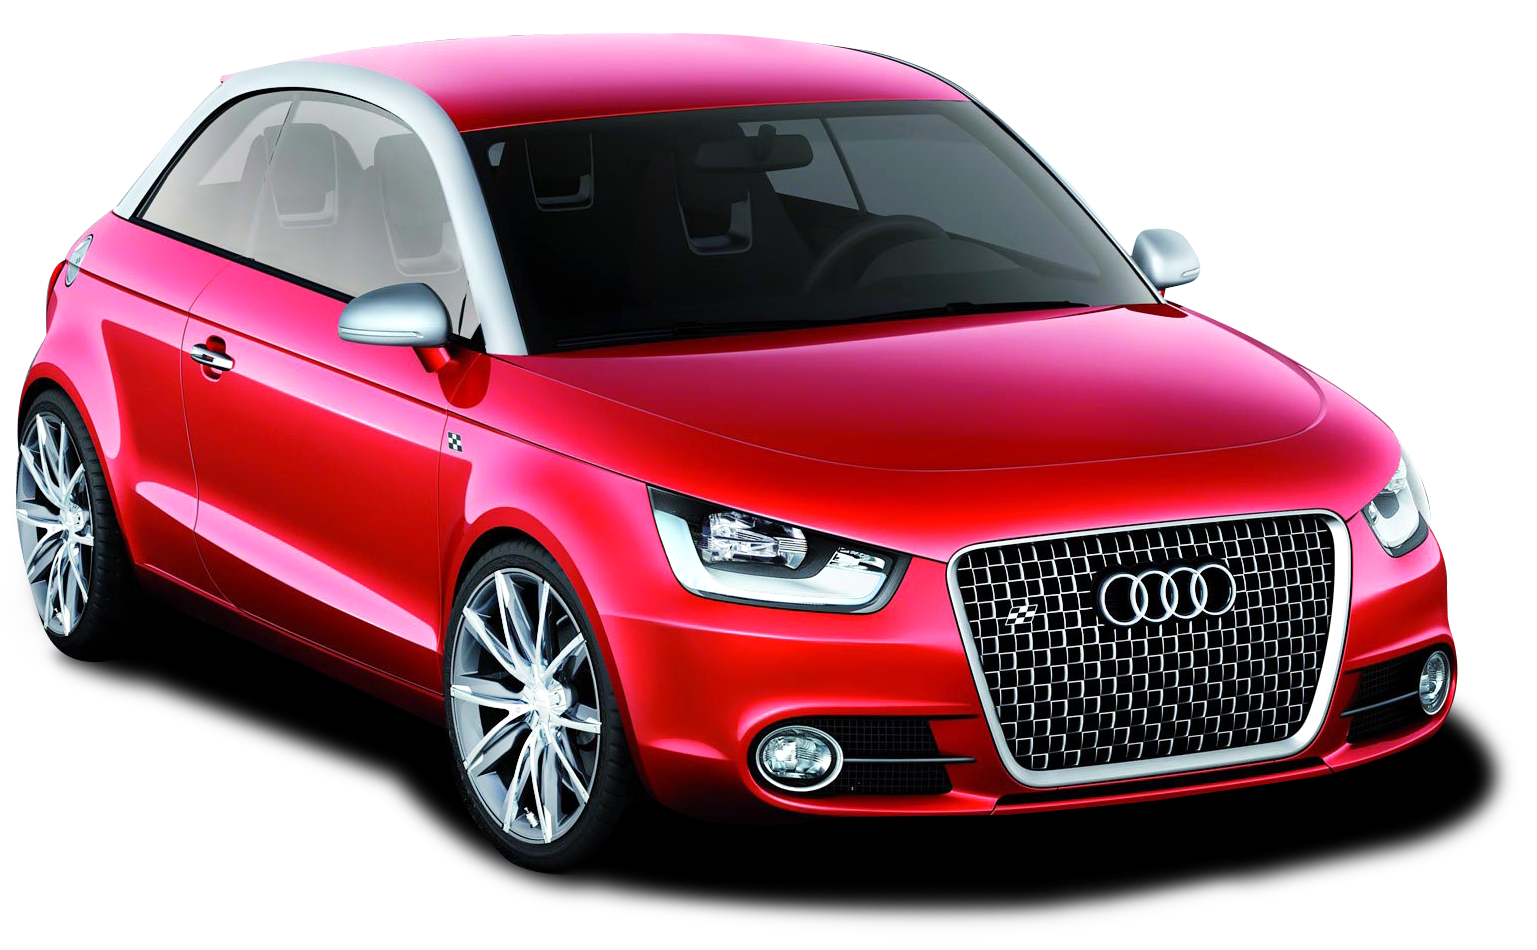 File:Audi A1 (2018) IMG 2611.jpg - Wikipedia